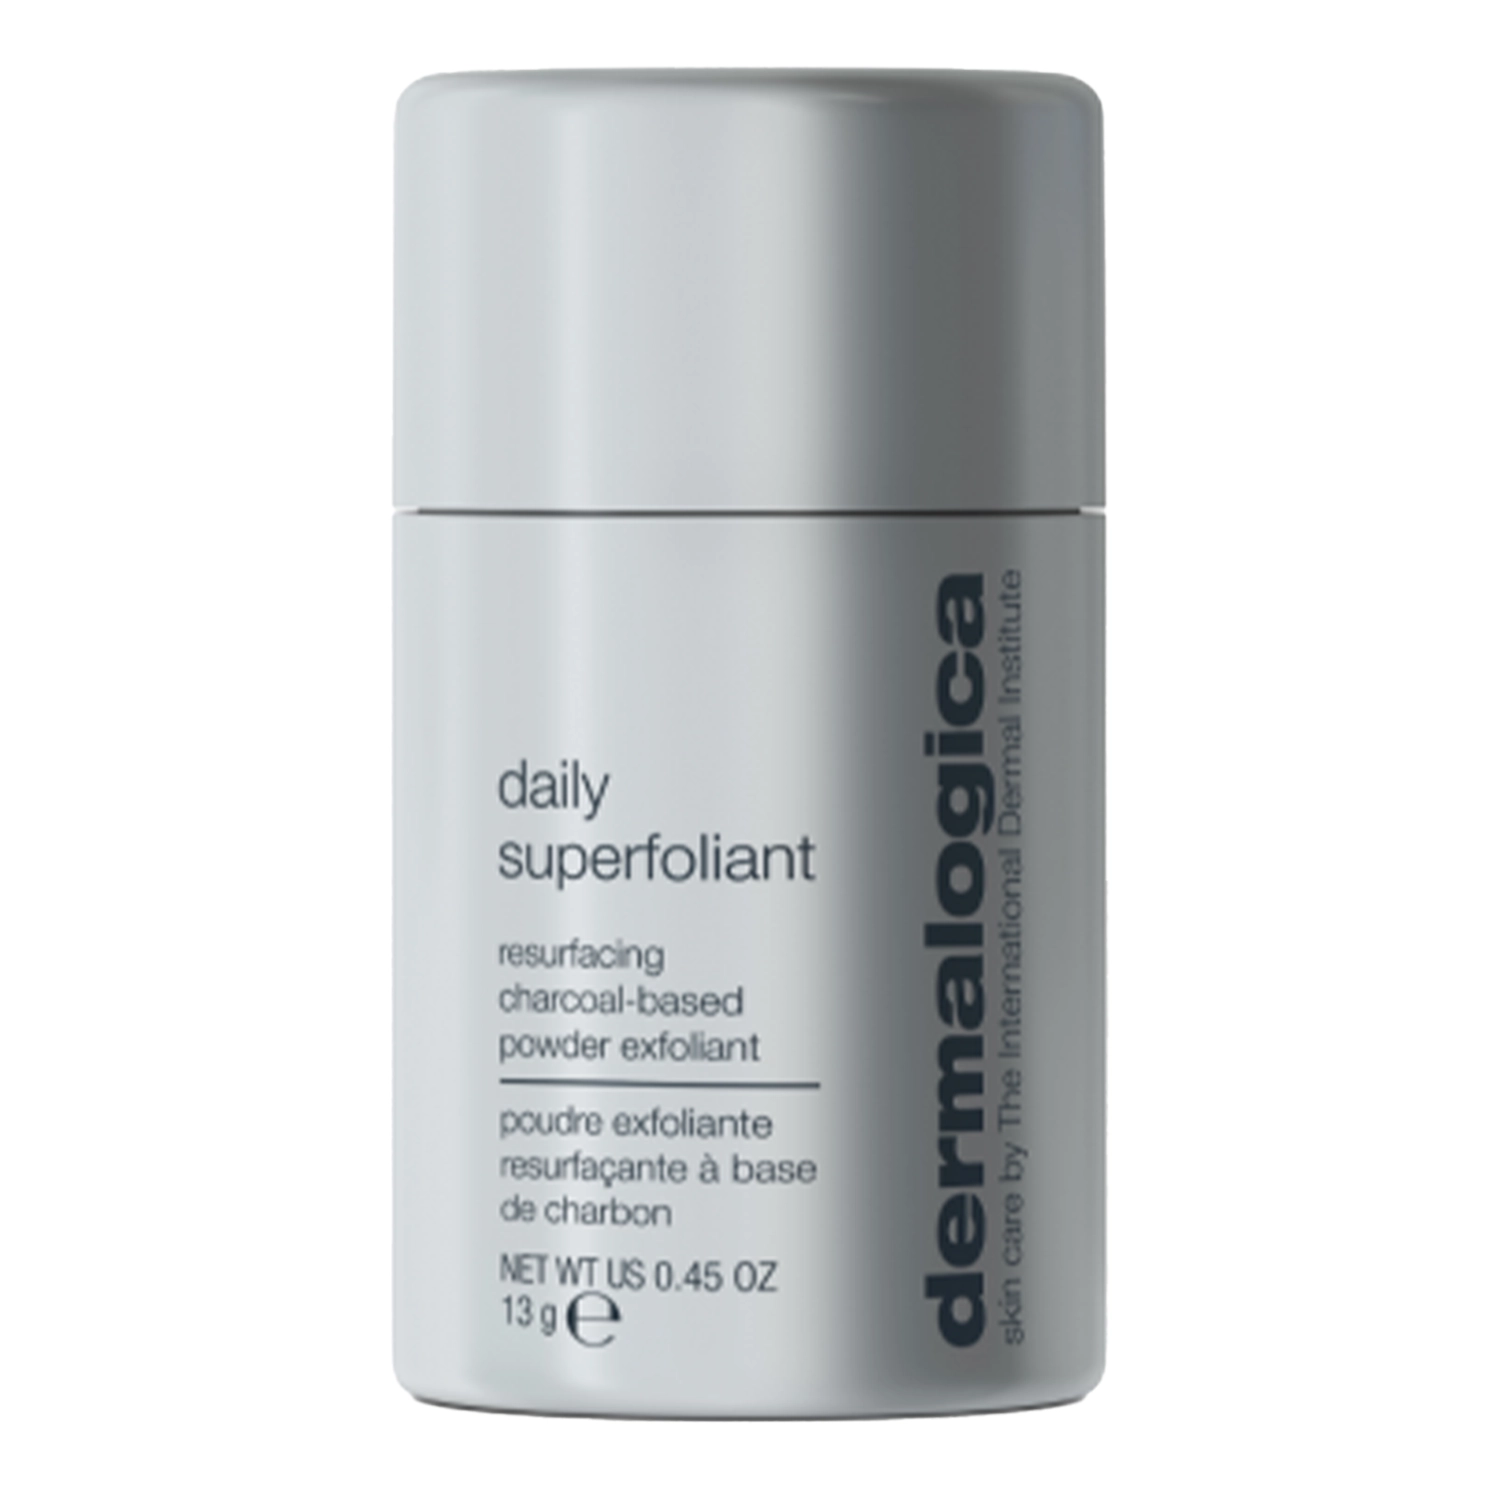 Dermalogica - Щоденний суперфоліант - Daily Superfoliant - 13g